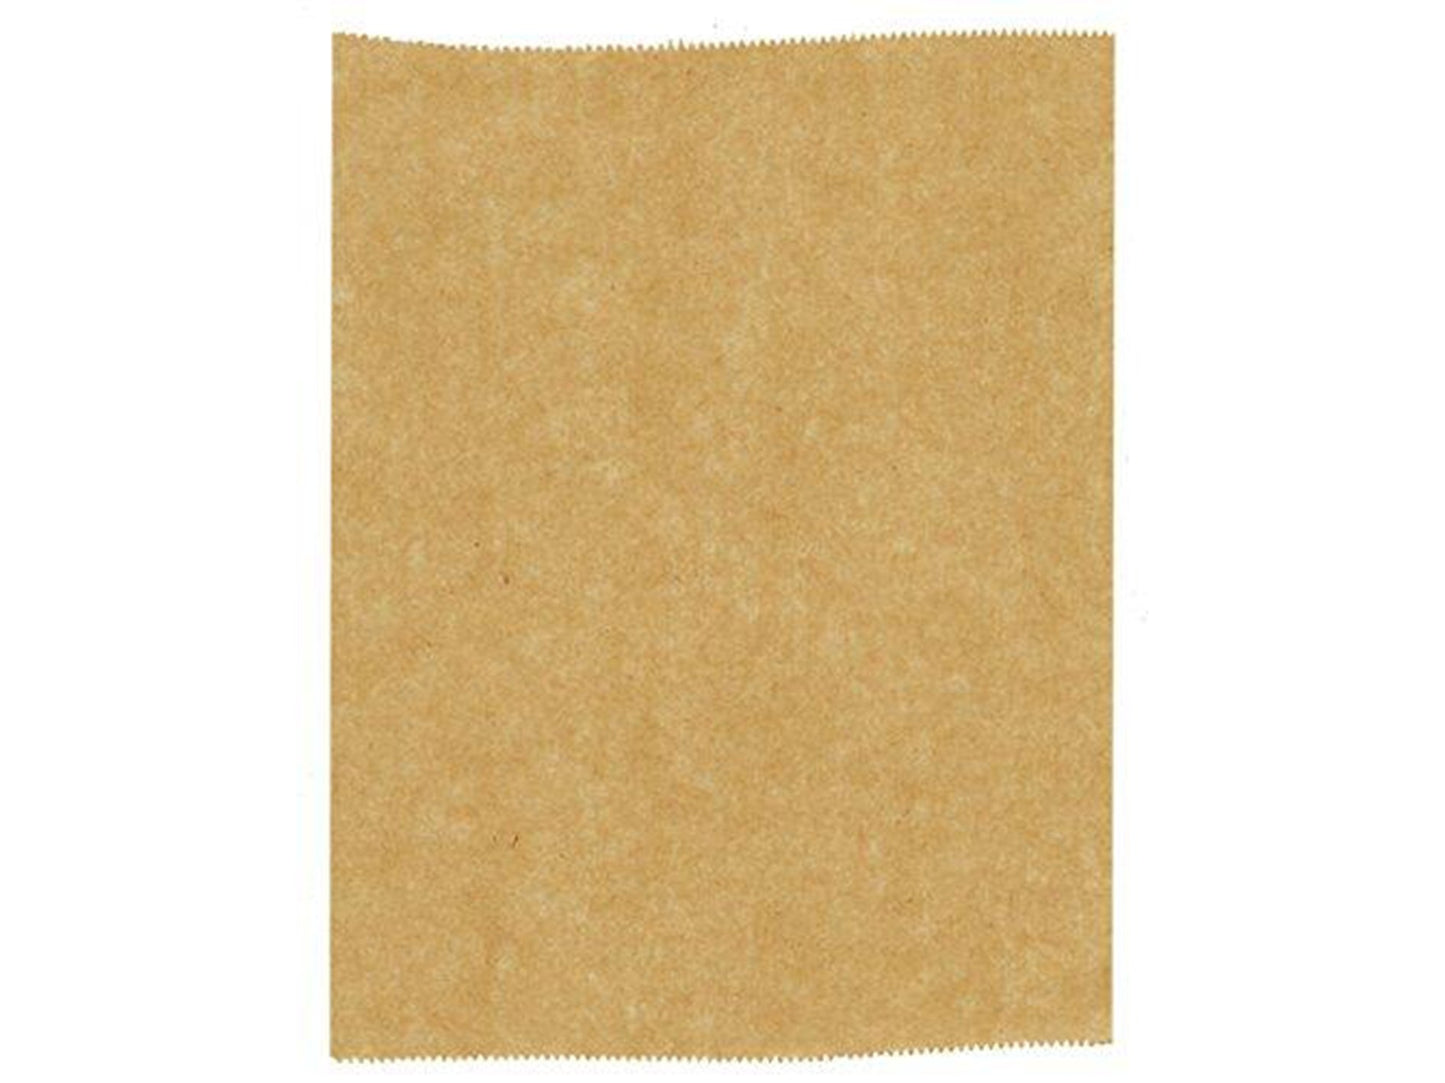 RAW Unrefined Parchment Paper Roll 400mm x 15m - VIR Wholesale